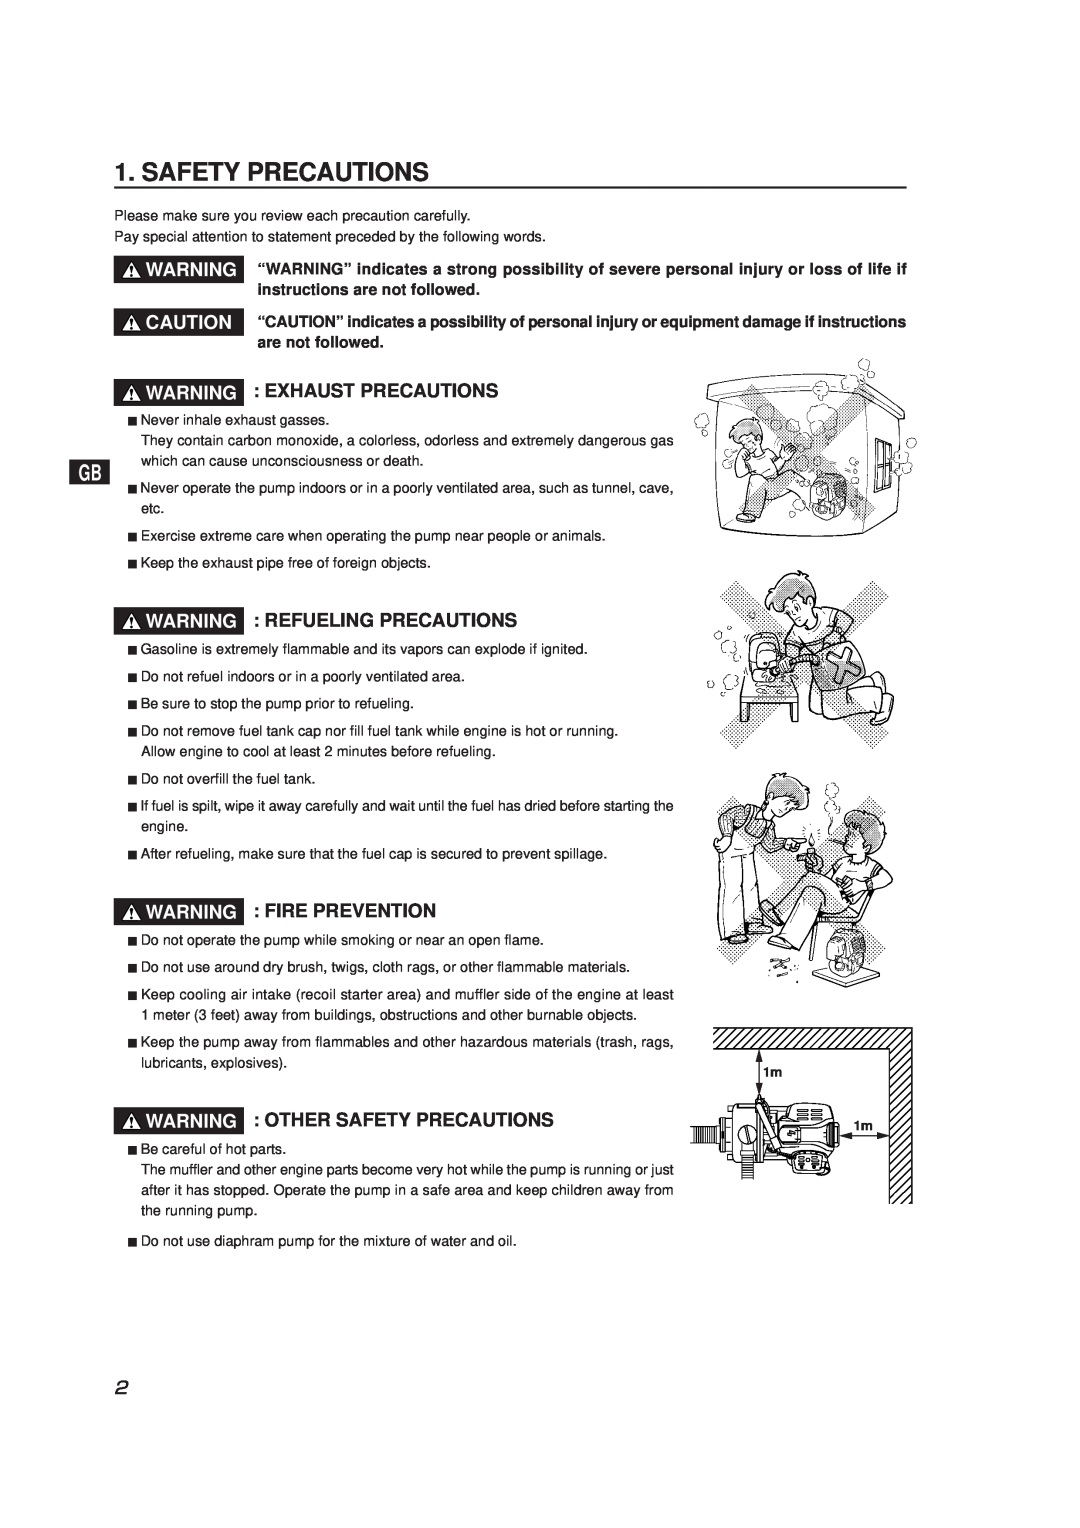 Subaru Robin Power Products PKV101 manual Safety Precautions, Warning Exhaust Precautions, Warning Refueling Precautions 